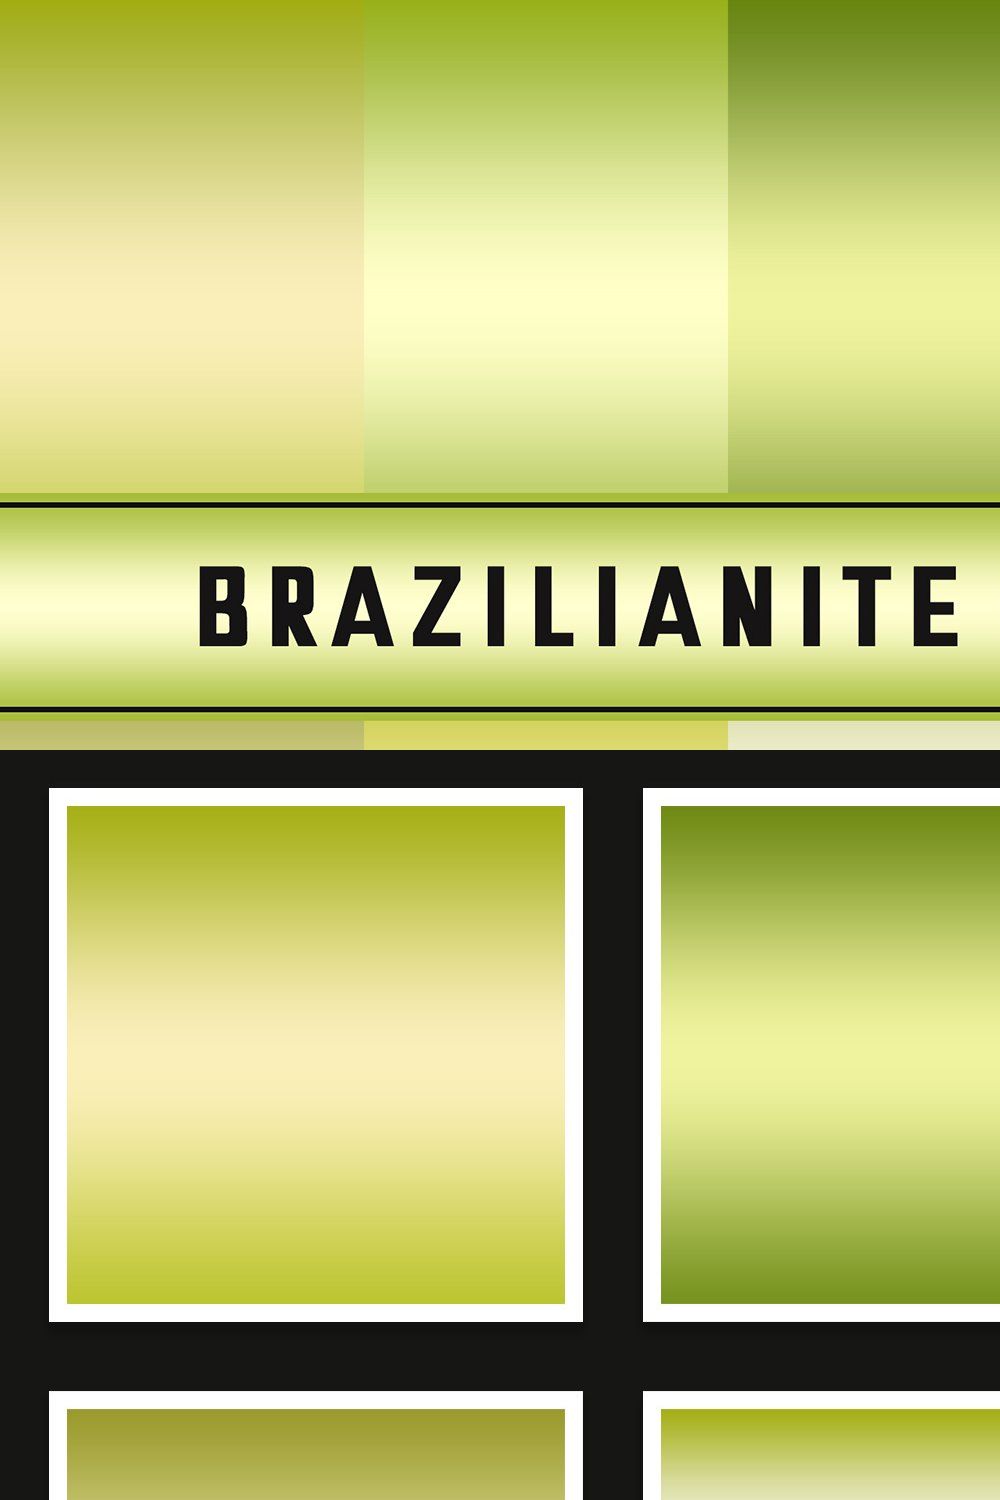 Brazilianite Gradients pinterest preview image.